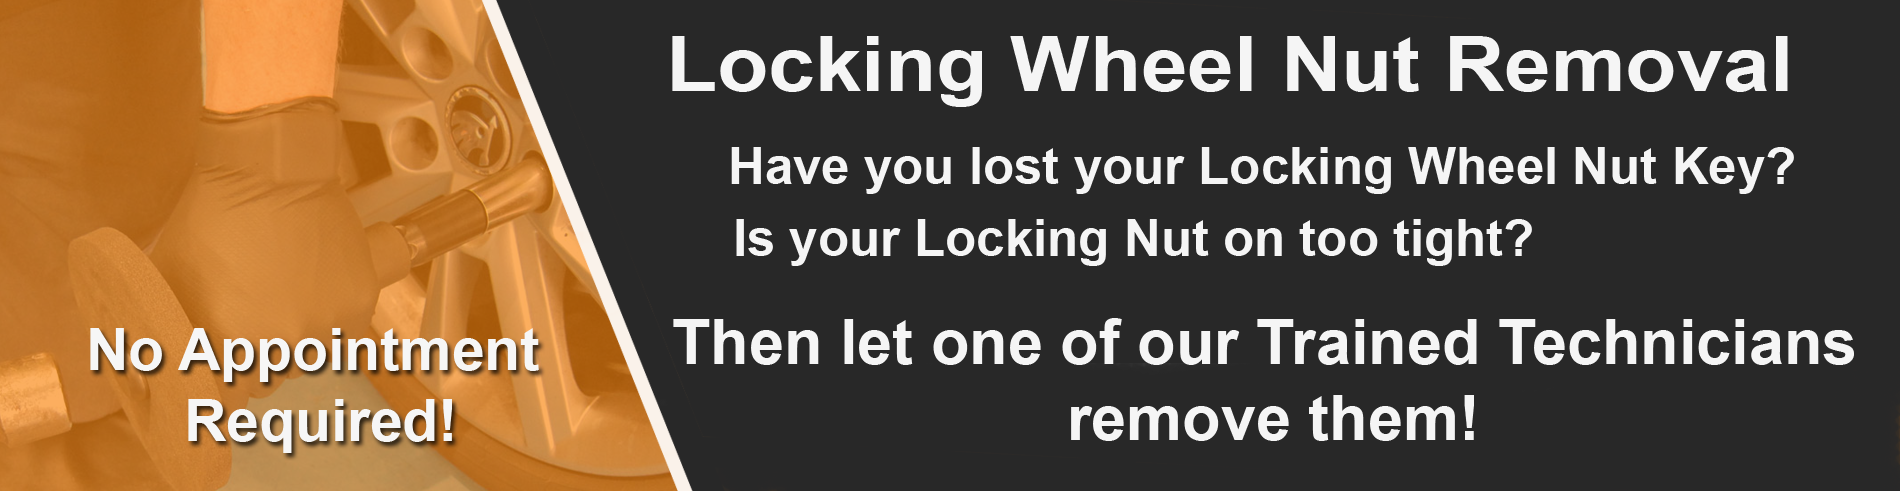 locking wheel nut removal 